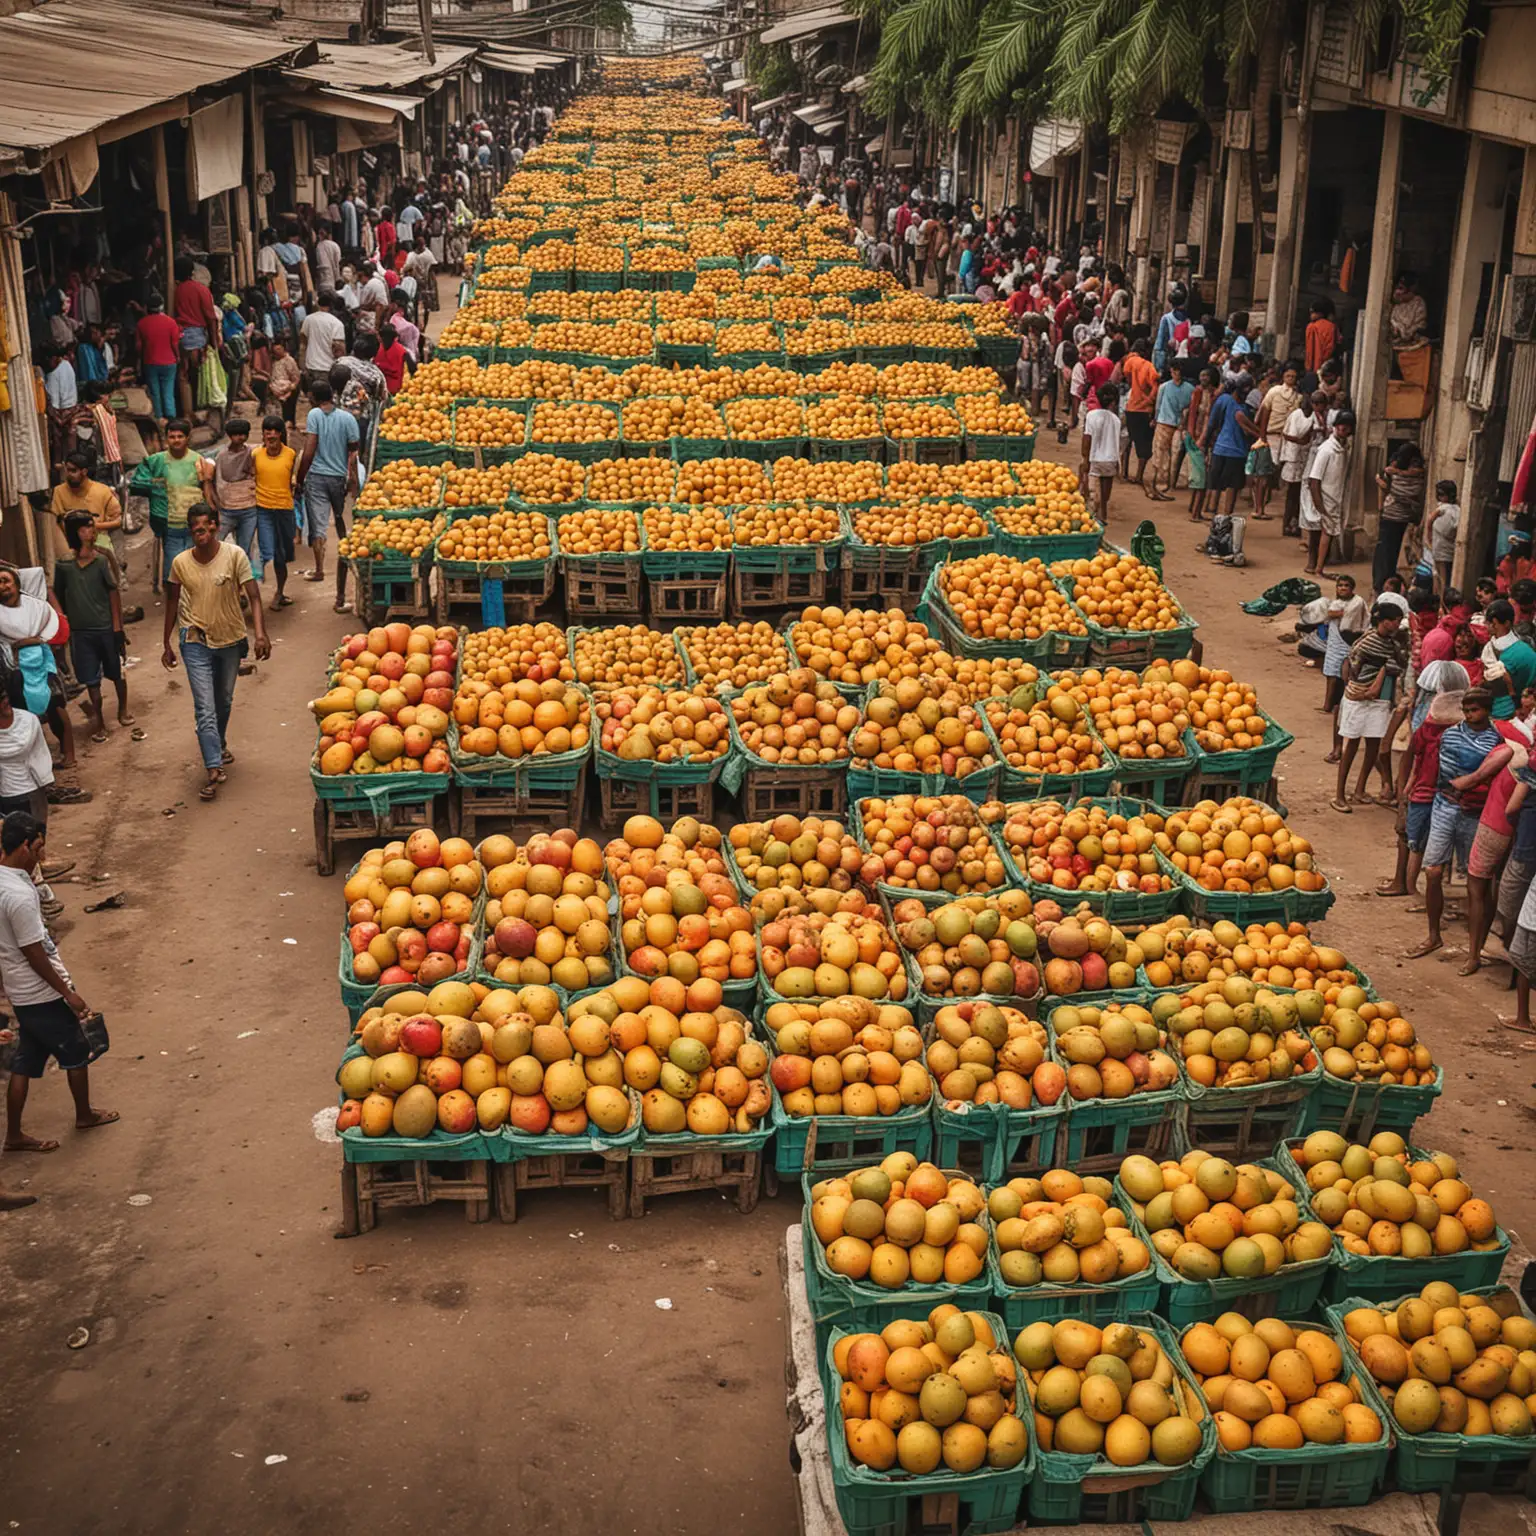 Vibrant-Mango-Market-Stall-Exotic-Fruits-Displayed-in-Bustling-Marketplace